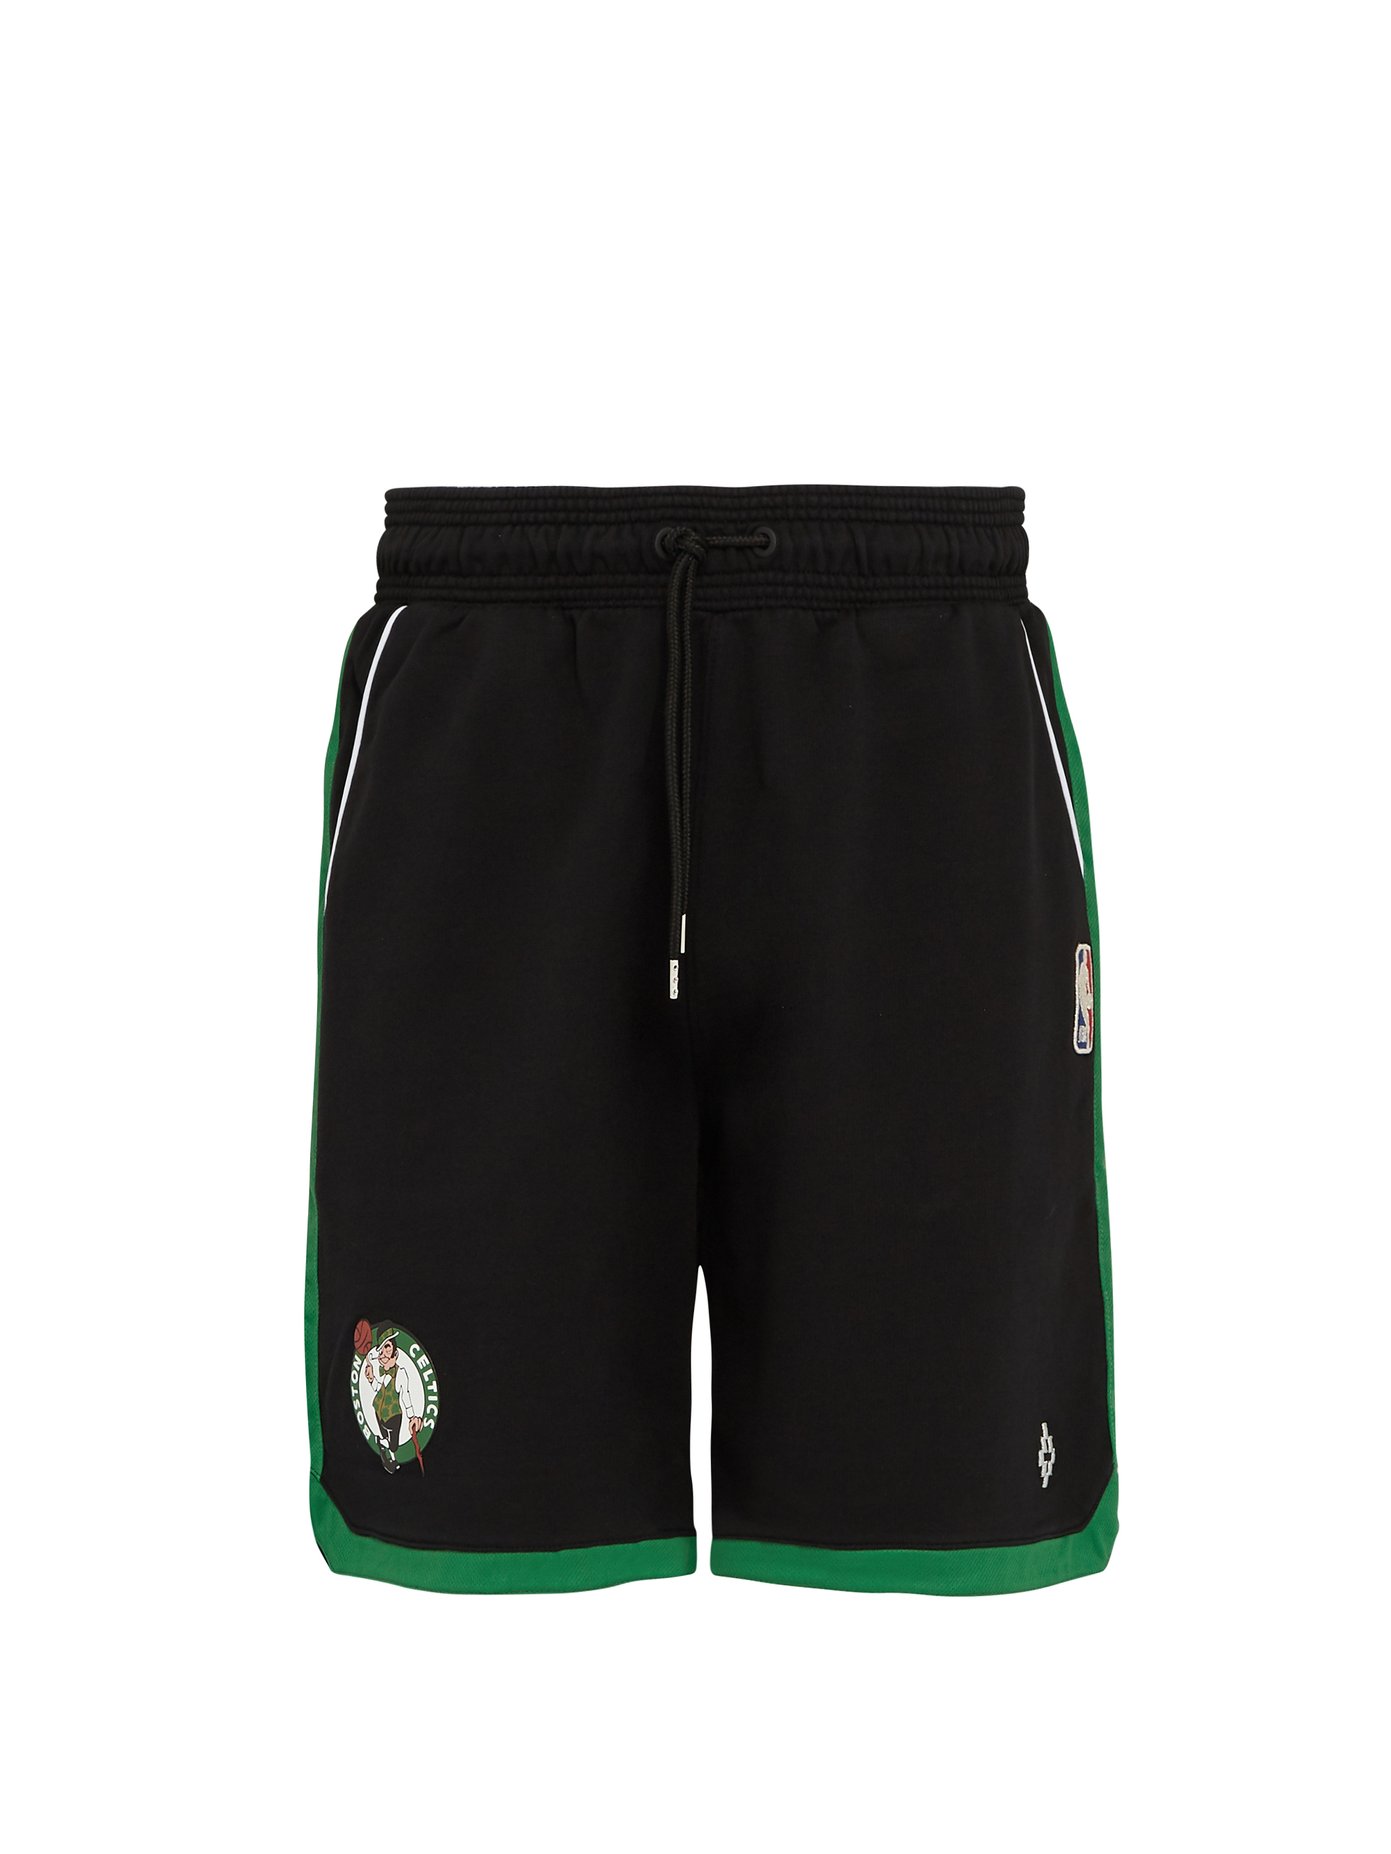 celtics shorts